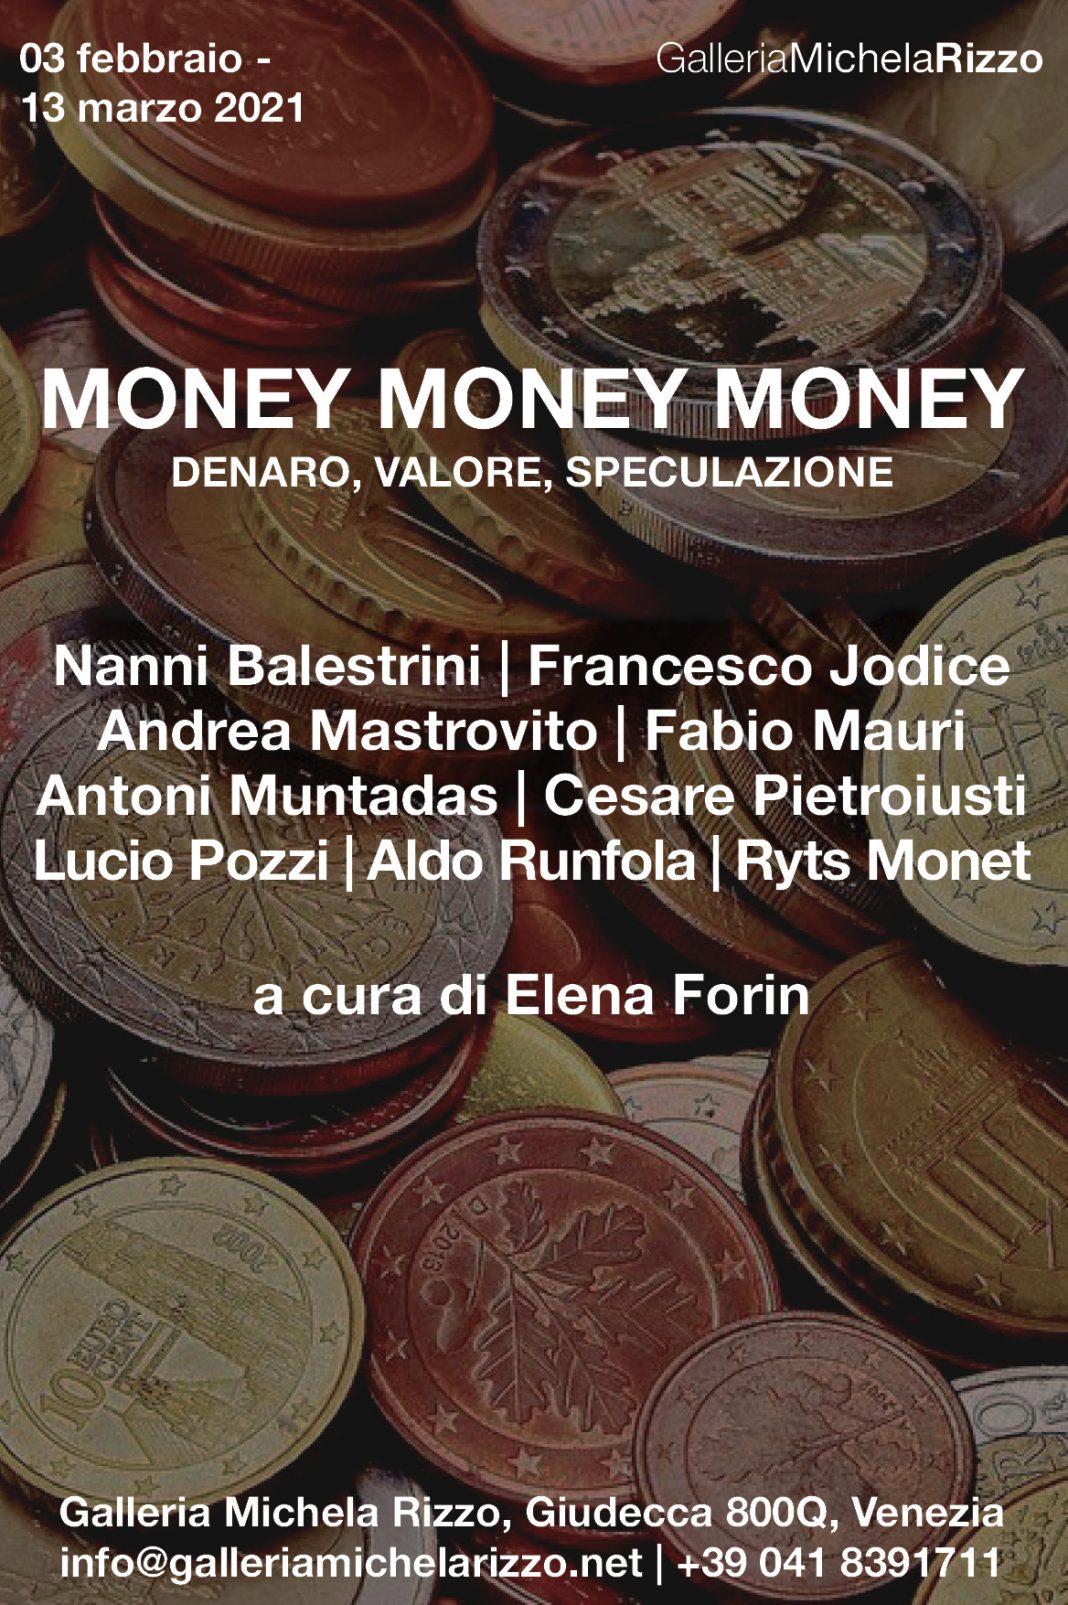 Money Money Money. Denaro, valore, speculazionehttps://www.exibart.com/repository/media/formidable/11/Galleria-Michela-Rizzo-Invito-Money-Money-Money-1068x1605.jpg